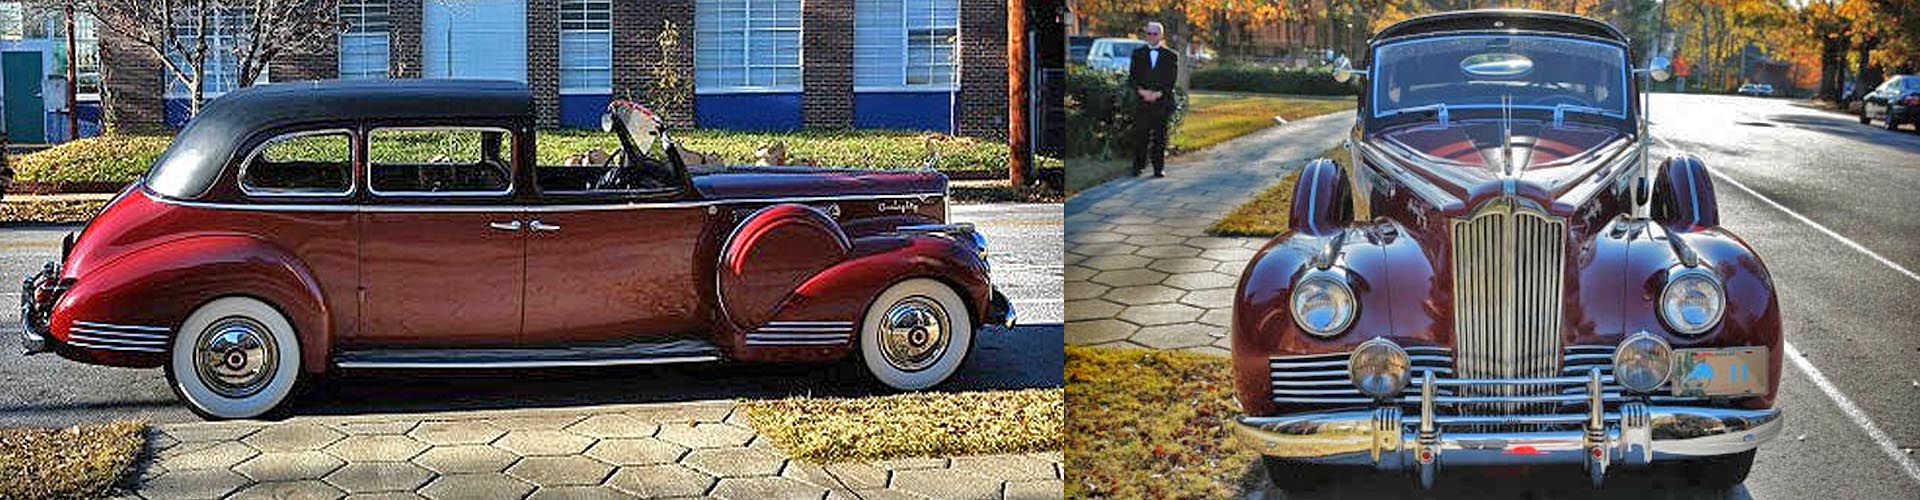 Classic Car Wedding Transportation 1942 Red Packard Luxury